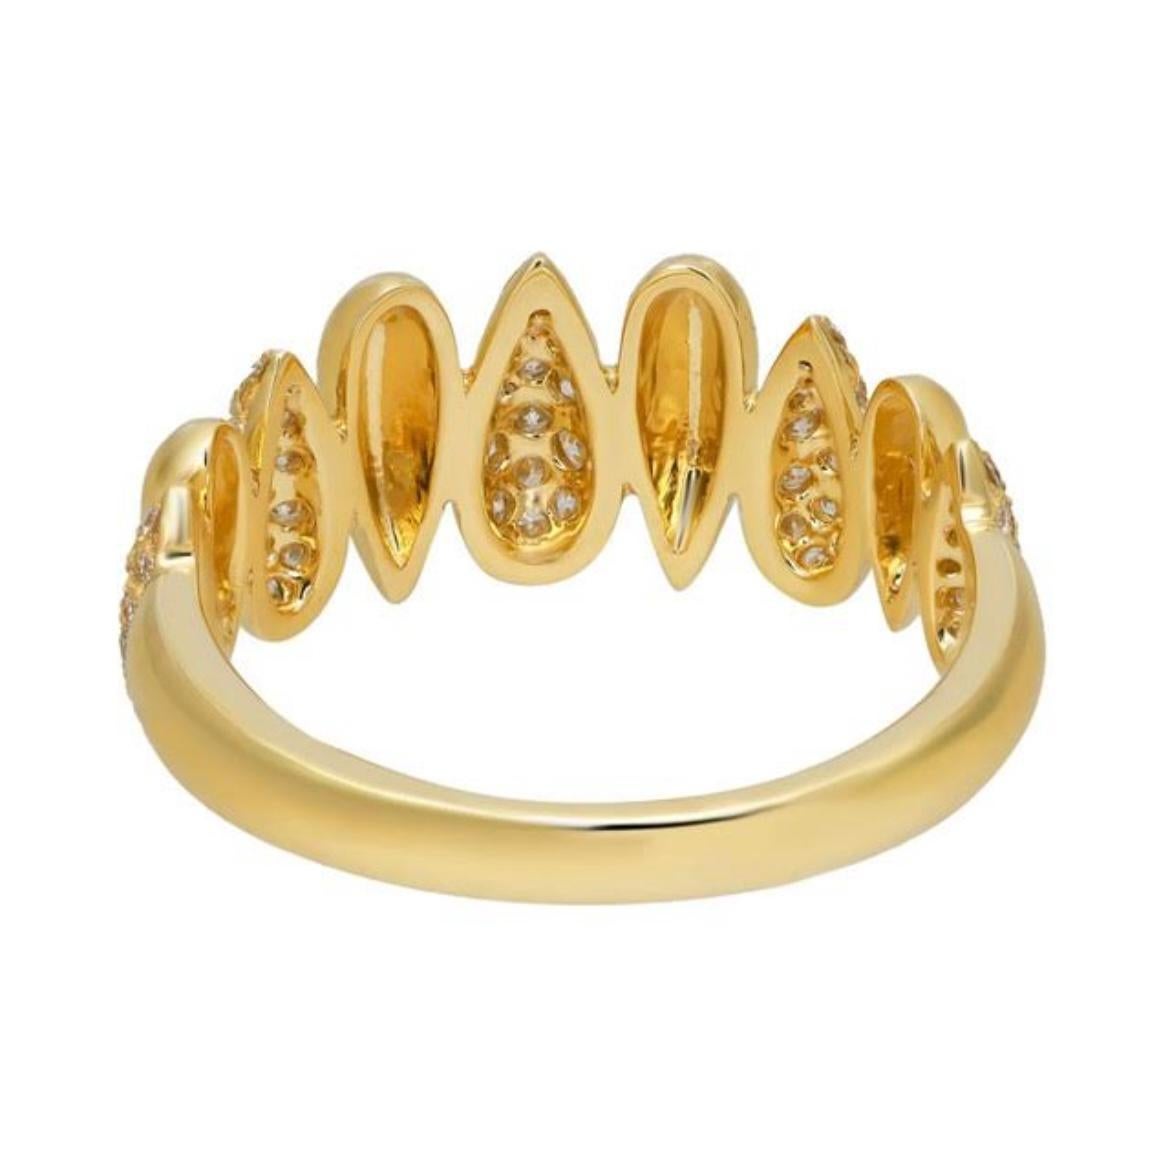 For Sale:  0.45 Carat Round Cut Diamond Fashion Ring 18K Yellow Gold 3